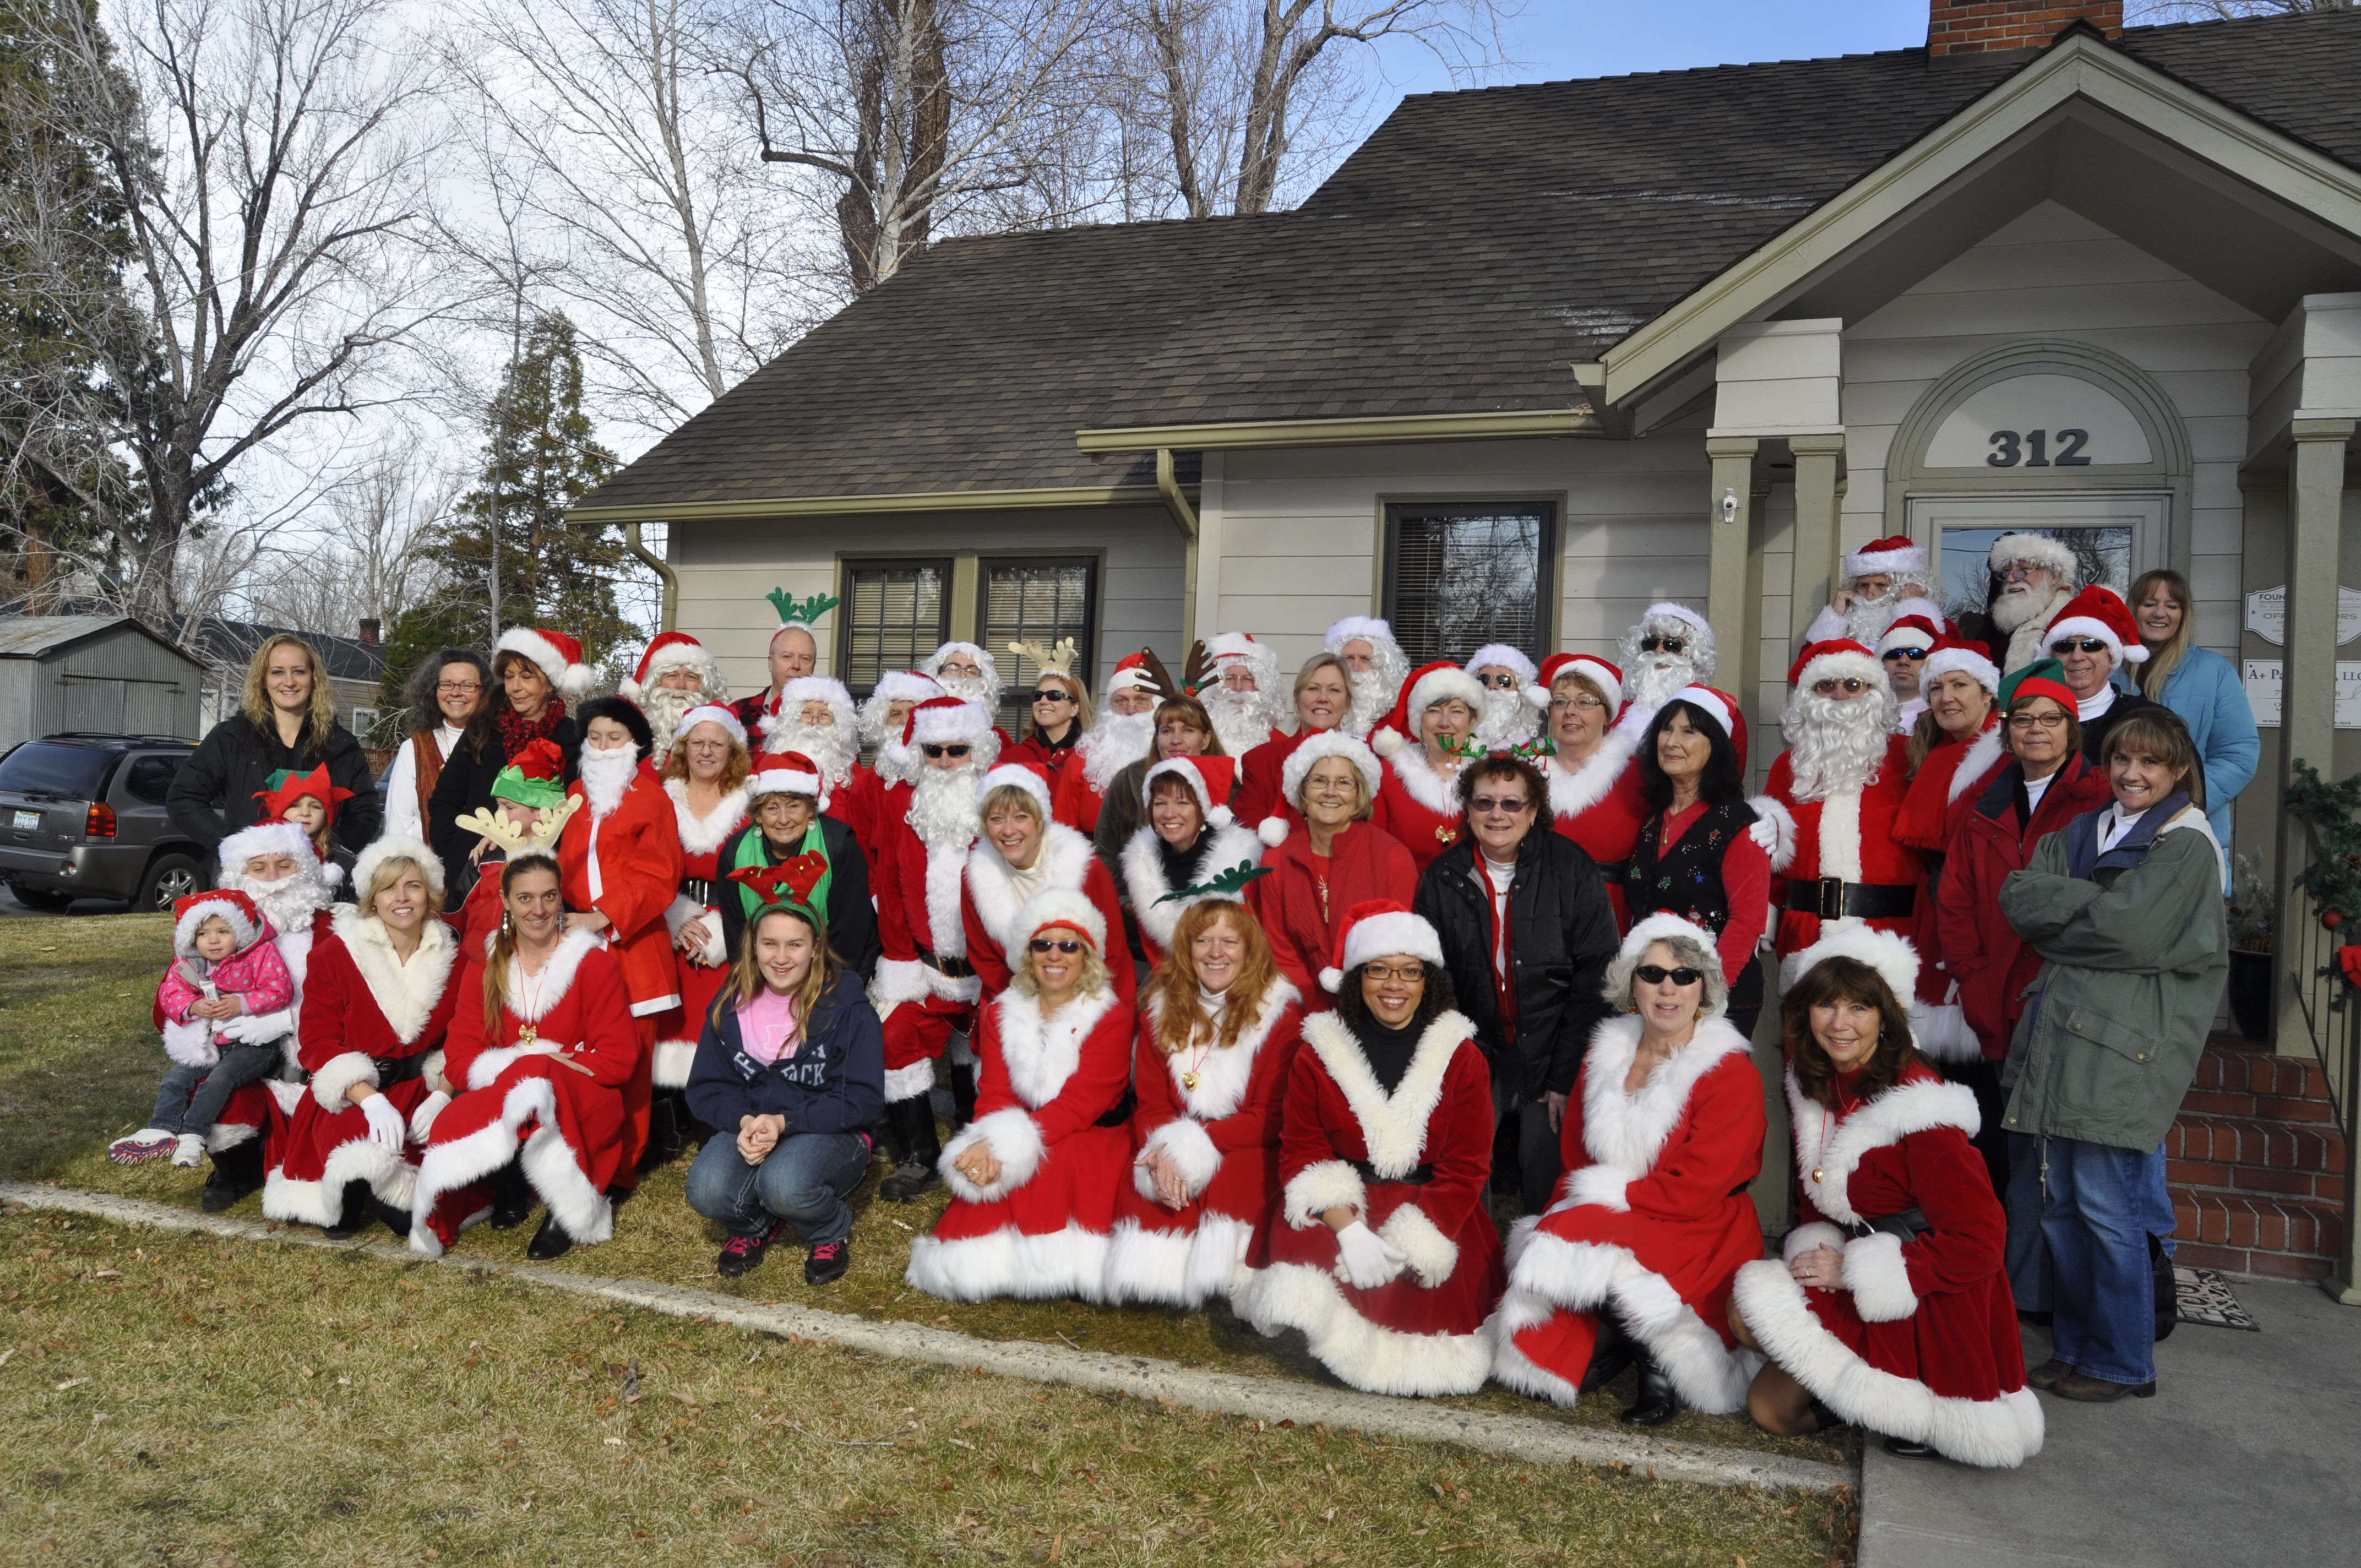 The Santa Teams…”Touching Hearts with a Visit”